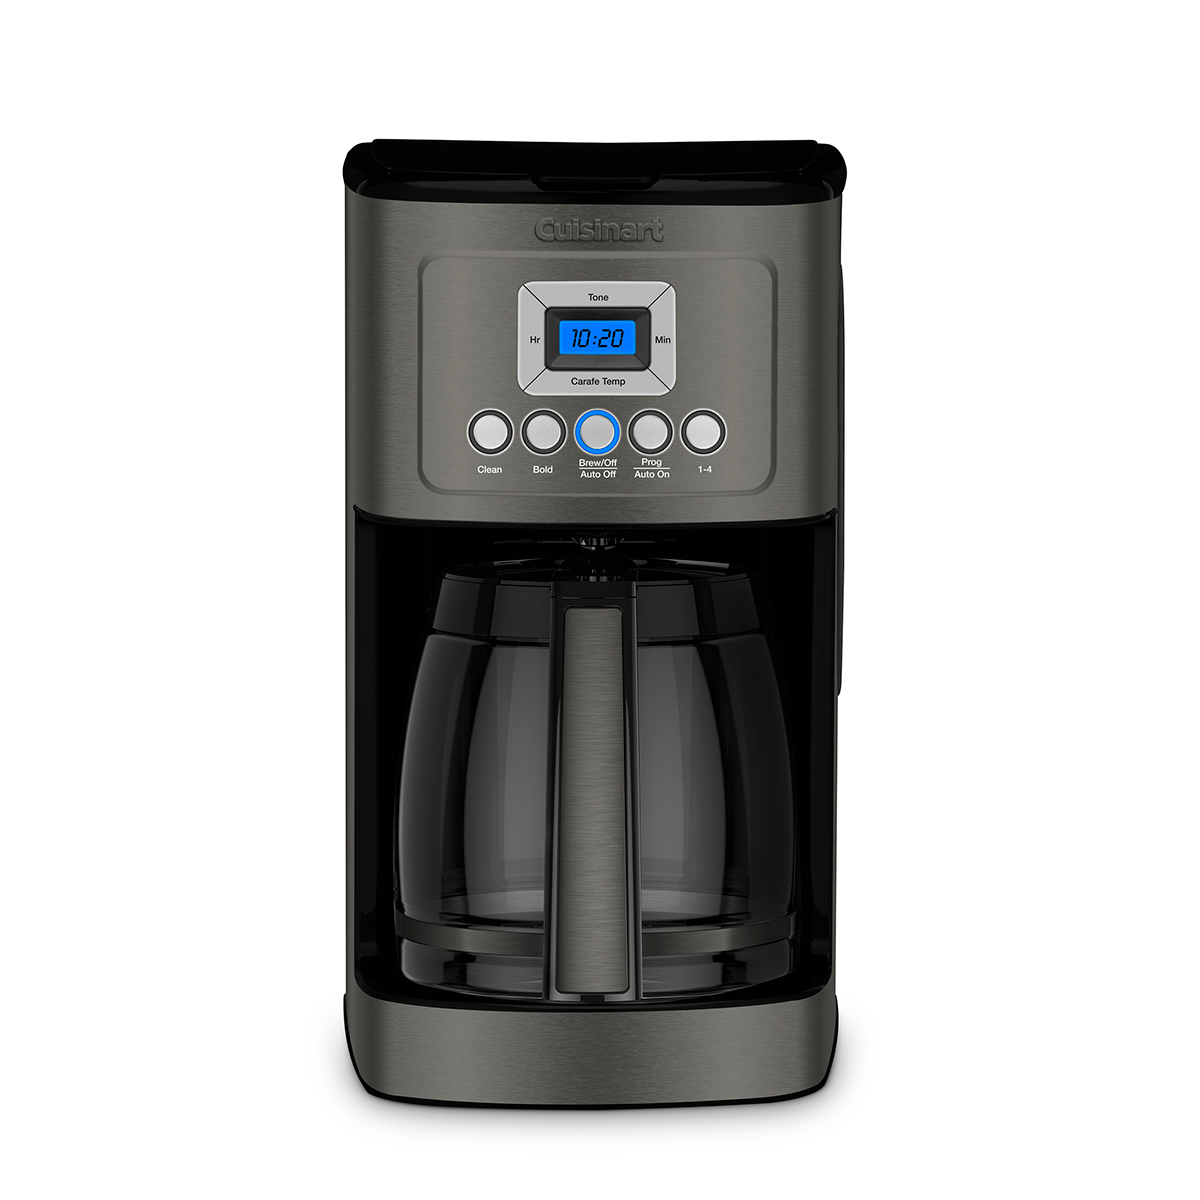 Cuisinart(R) PerfectTemp 14-Cup Programmable Coffee Maker